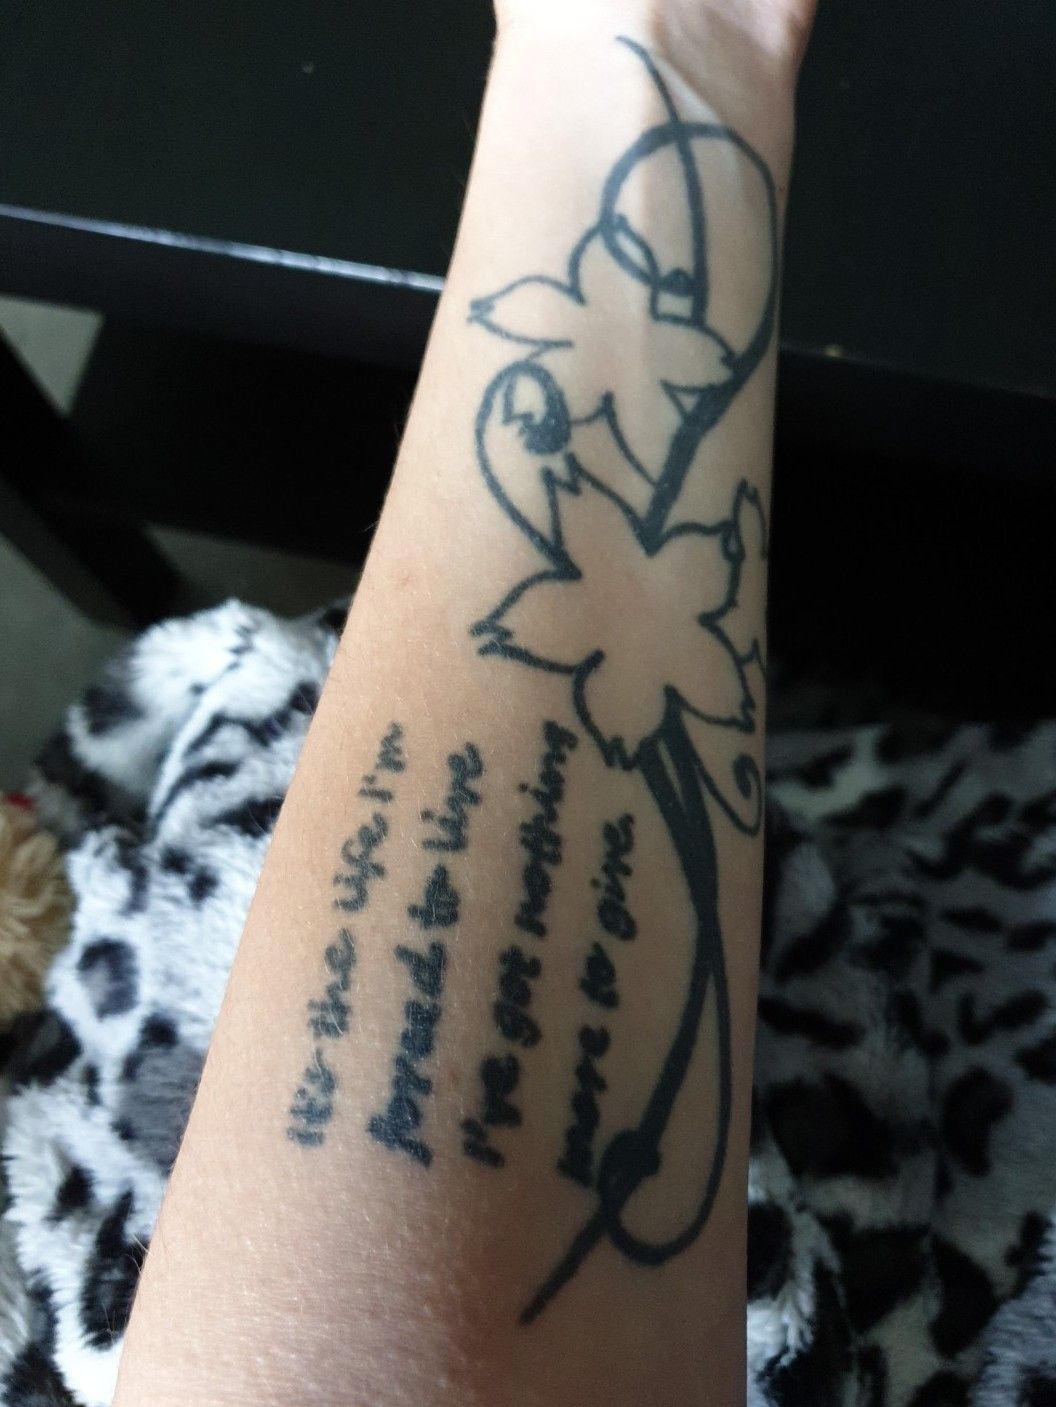 Tattoo uploaded by steffy karlsson • My tattoo. Lyrics from five finger death punch • Tattoodo